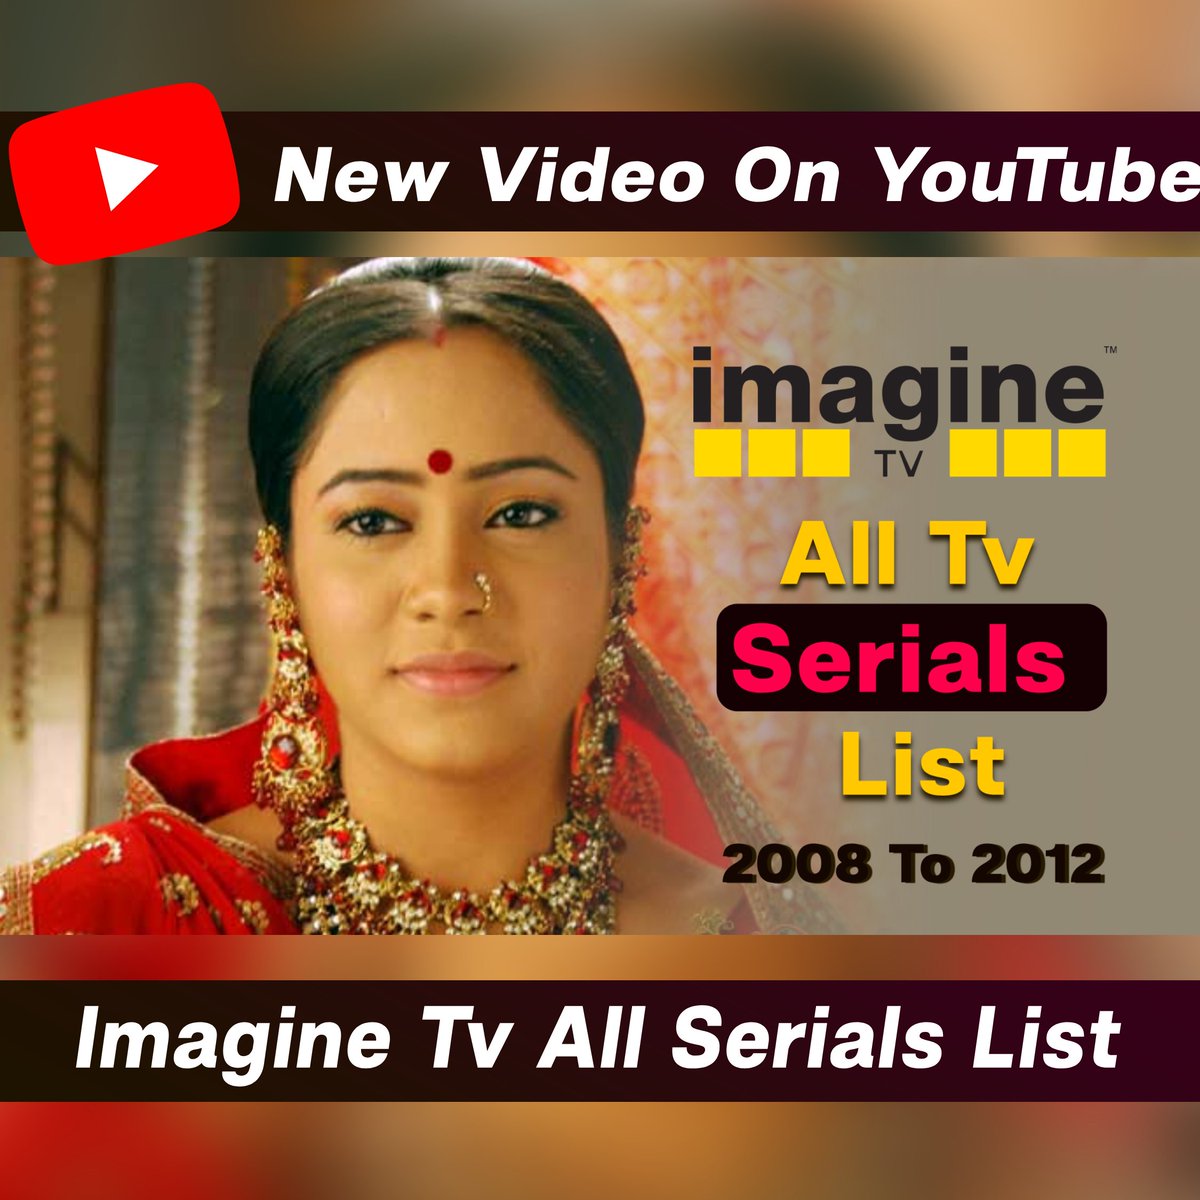 Watch Now:- youtu.be/ufyBfZnWp5I
Imagine Tv All Tv Serials List 2008-2012

#ImagineTv #Ndtv #Ndtvimagine #Bandini #DangalTv #tvserial #serial #Oldserial #VioJashn